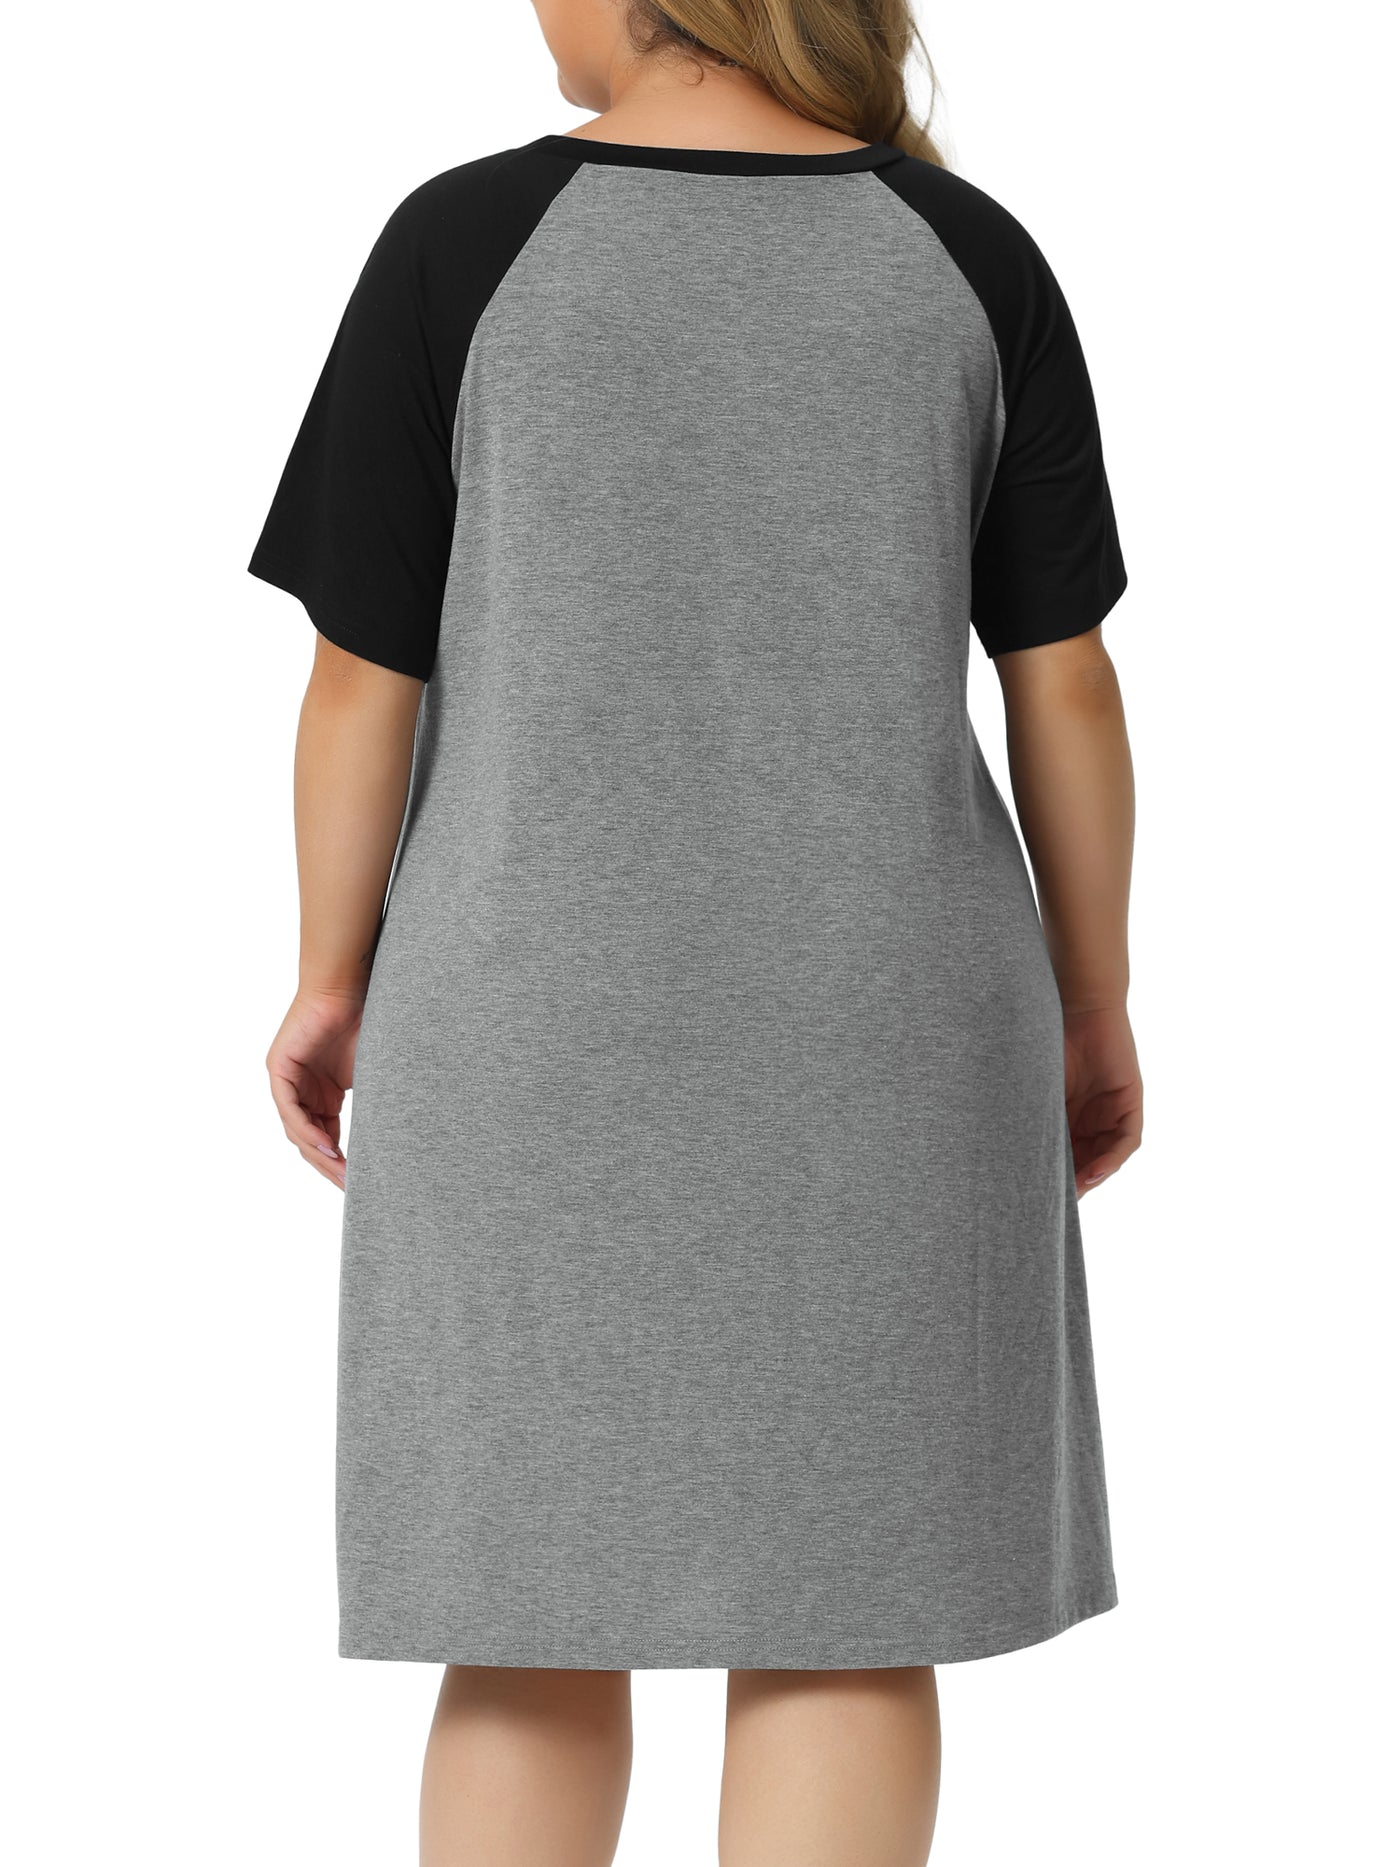 Bublédon Plus Size Nightgown for Women Short Sleeve Cute Graphic Sleepshirts Lounge Sleep Dress Sleepwear